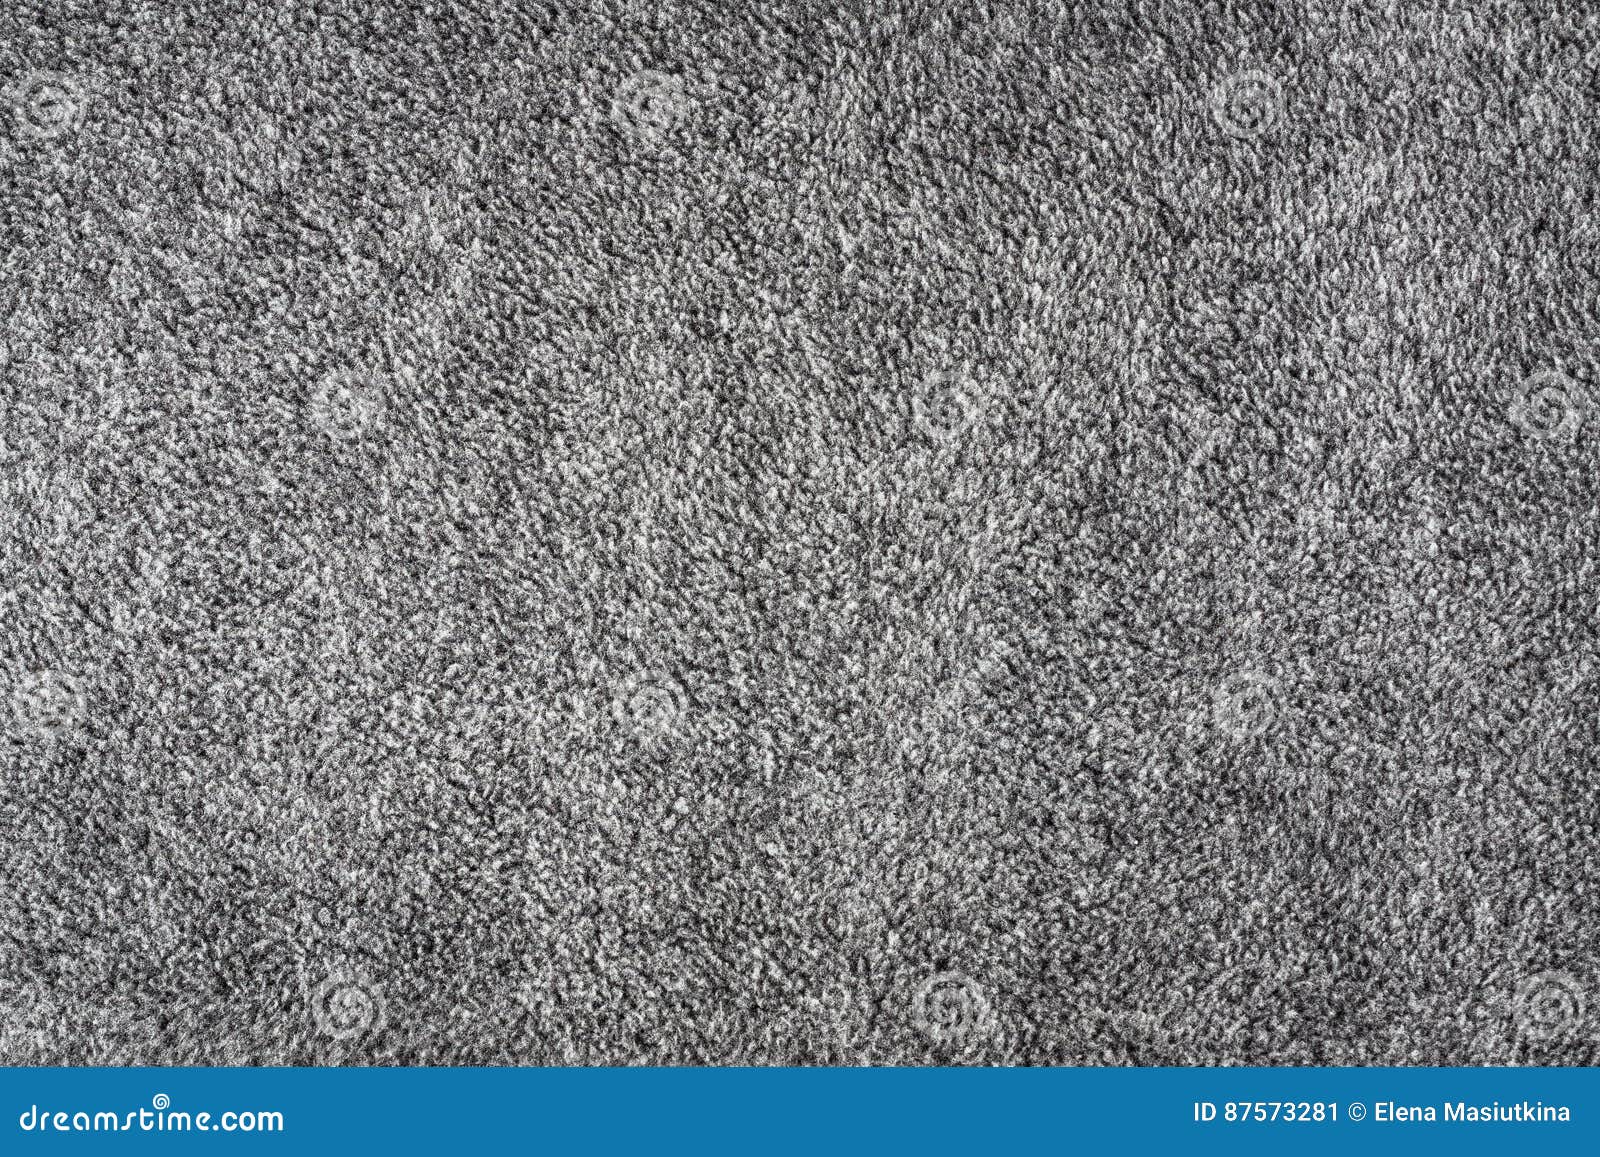 Grey Fleece Fabric Texture Stock Image | CartoonDealer.com #172685317